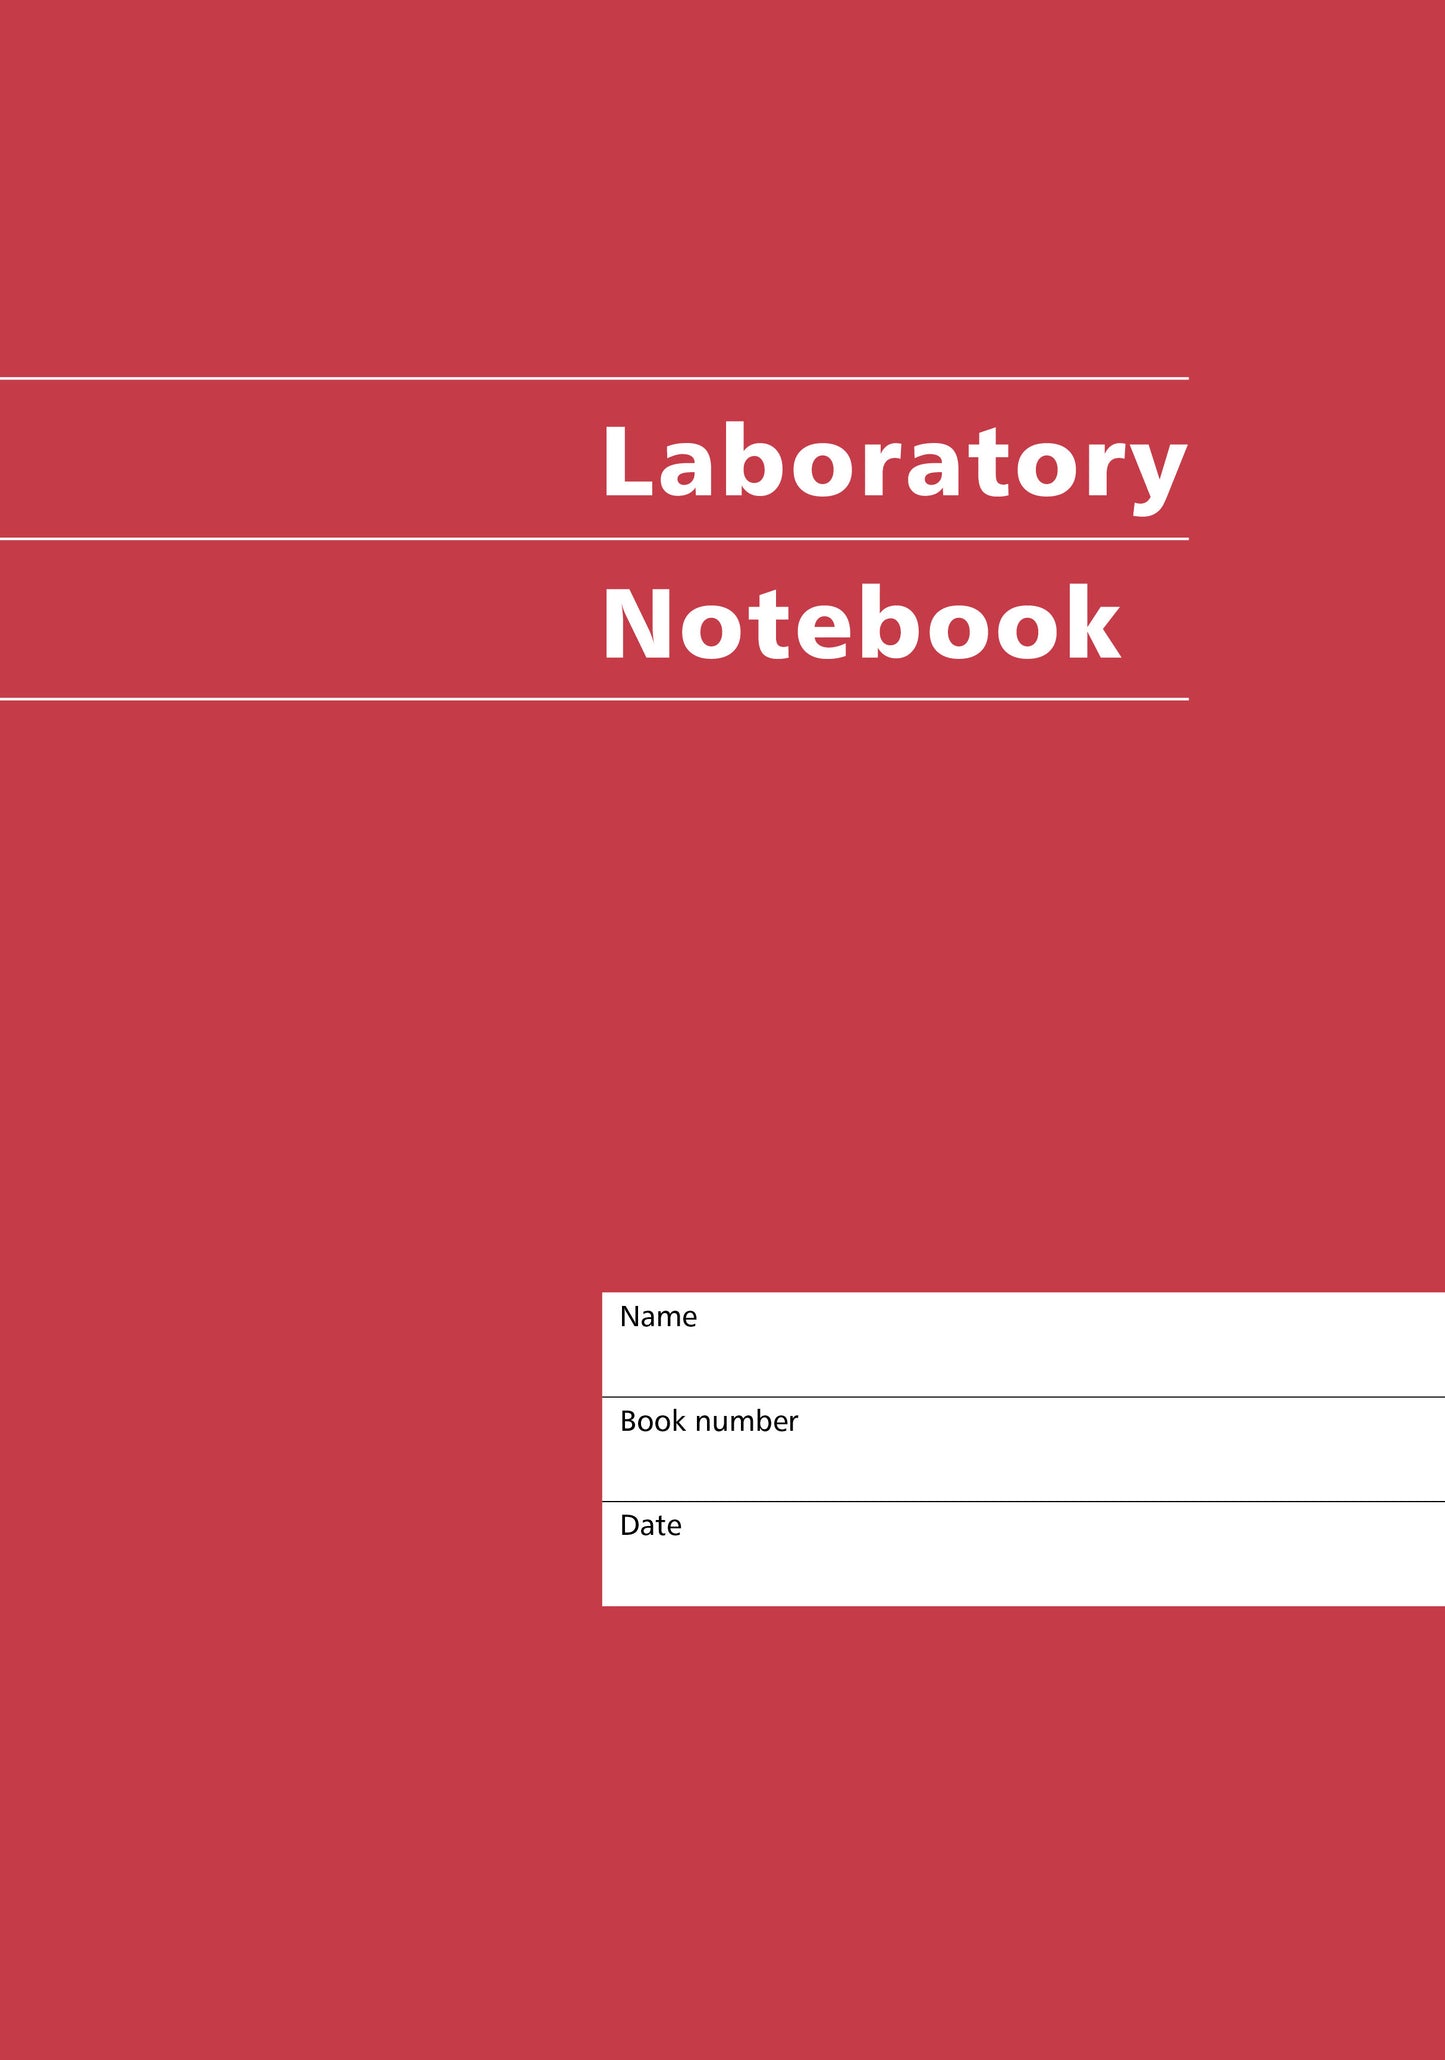 Mitchells Laboratory Notebooks A01 Red